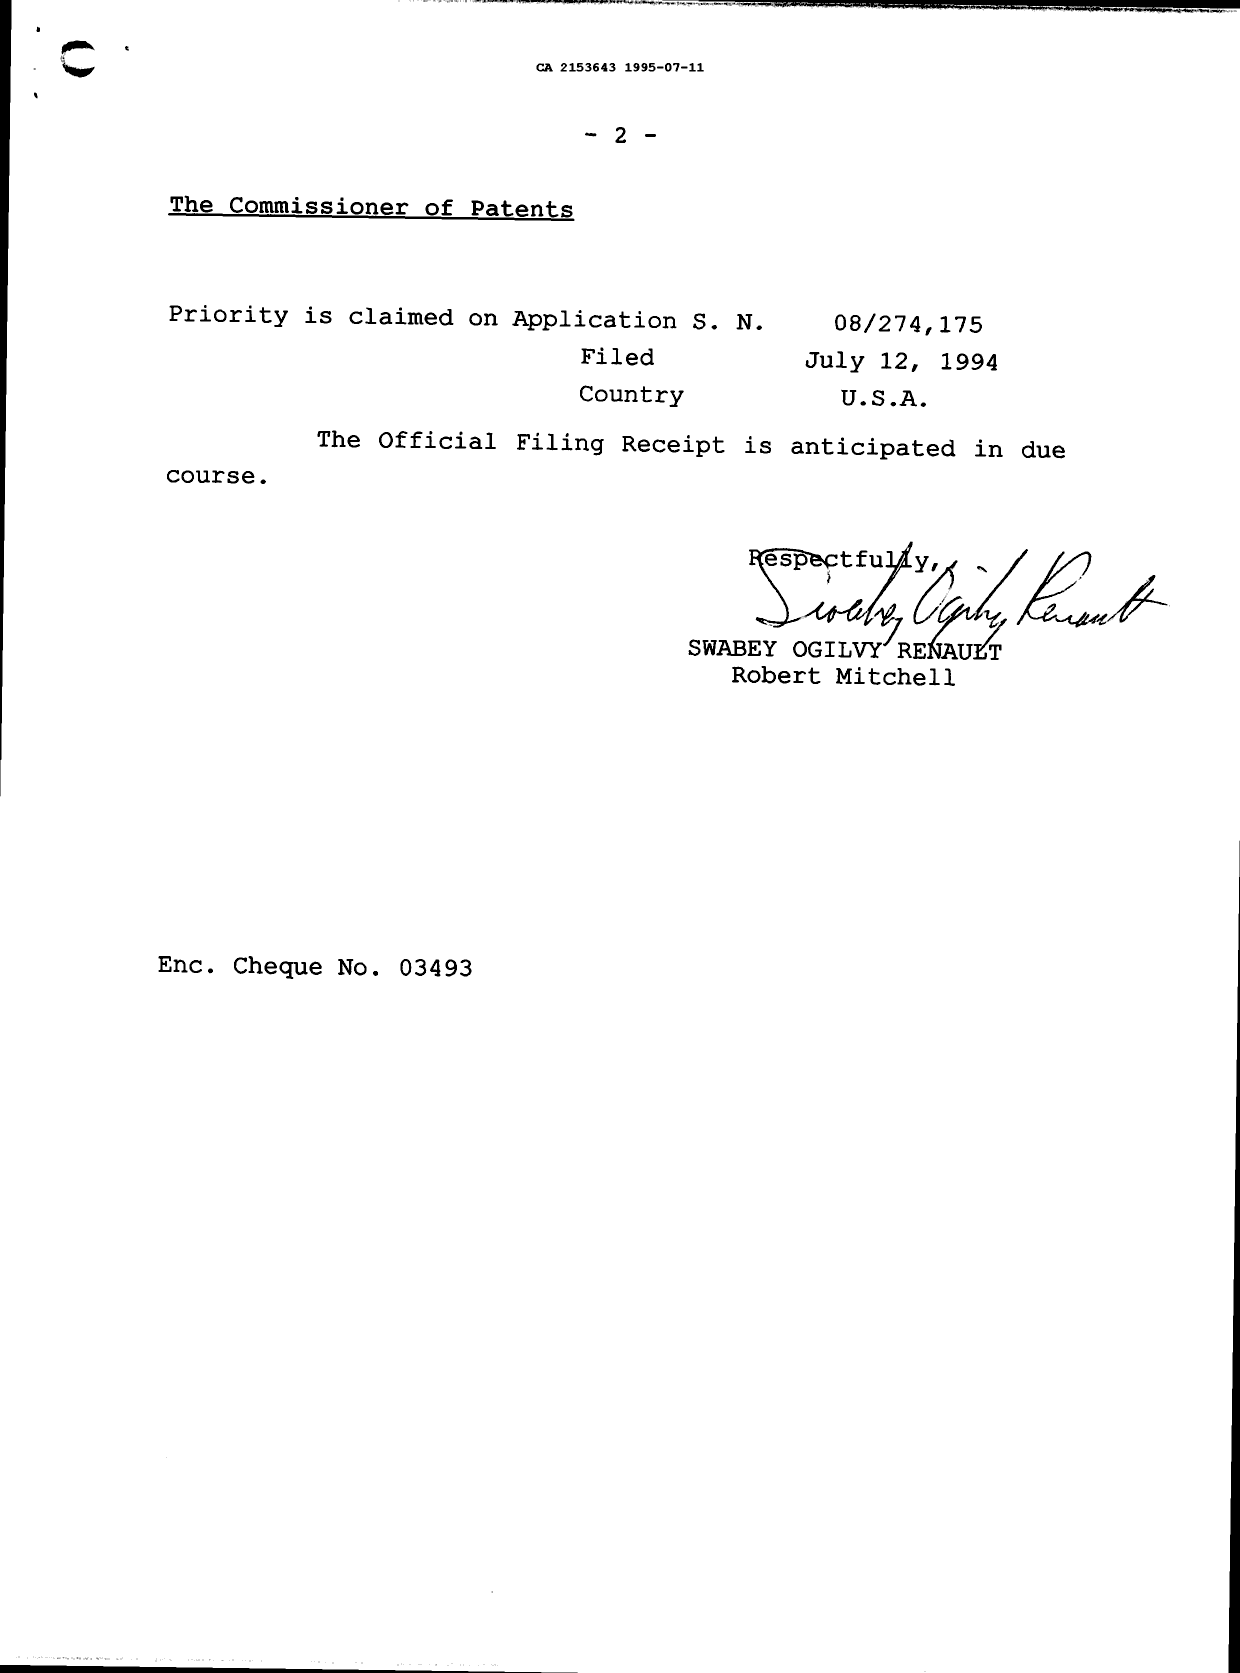 Canadian Patent Document 2153643. Prosecution Correspondence 19950711. Image 2 of 6